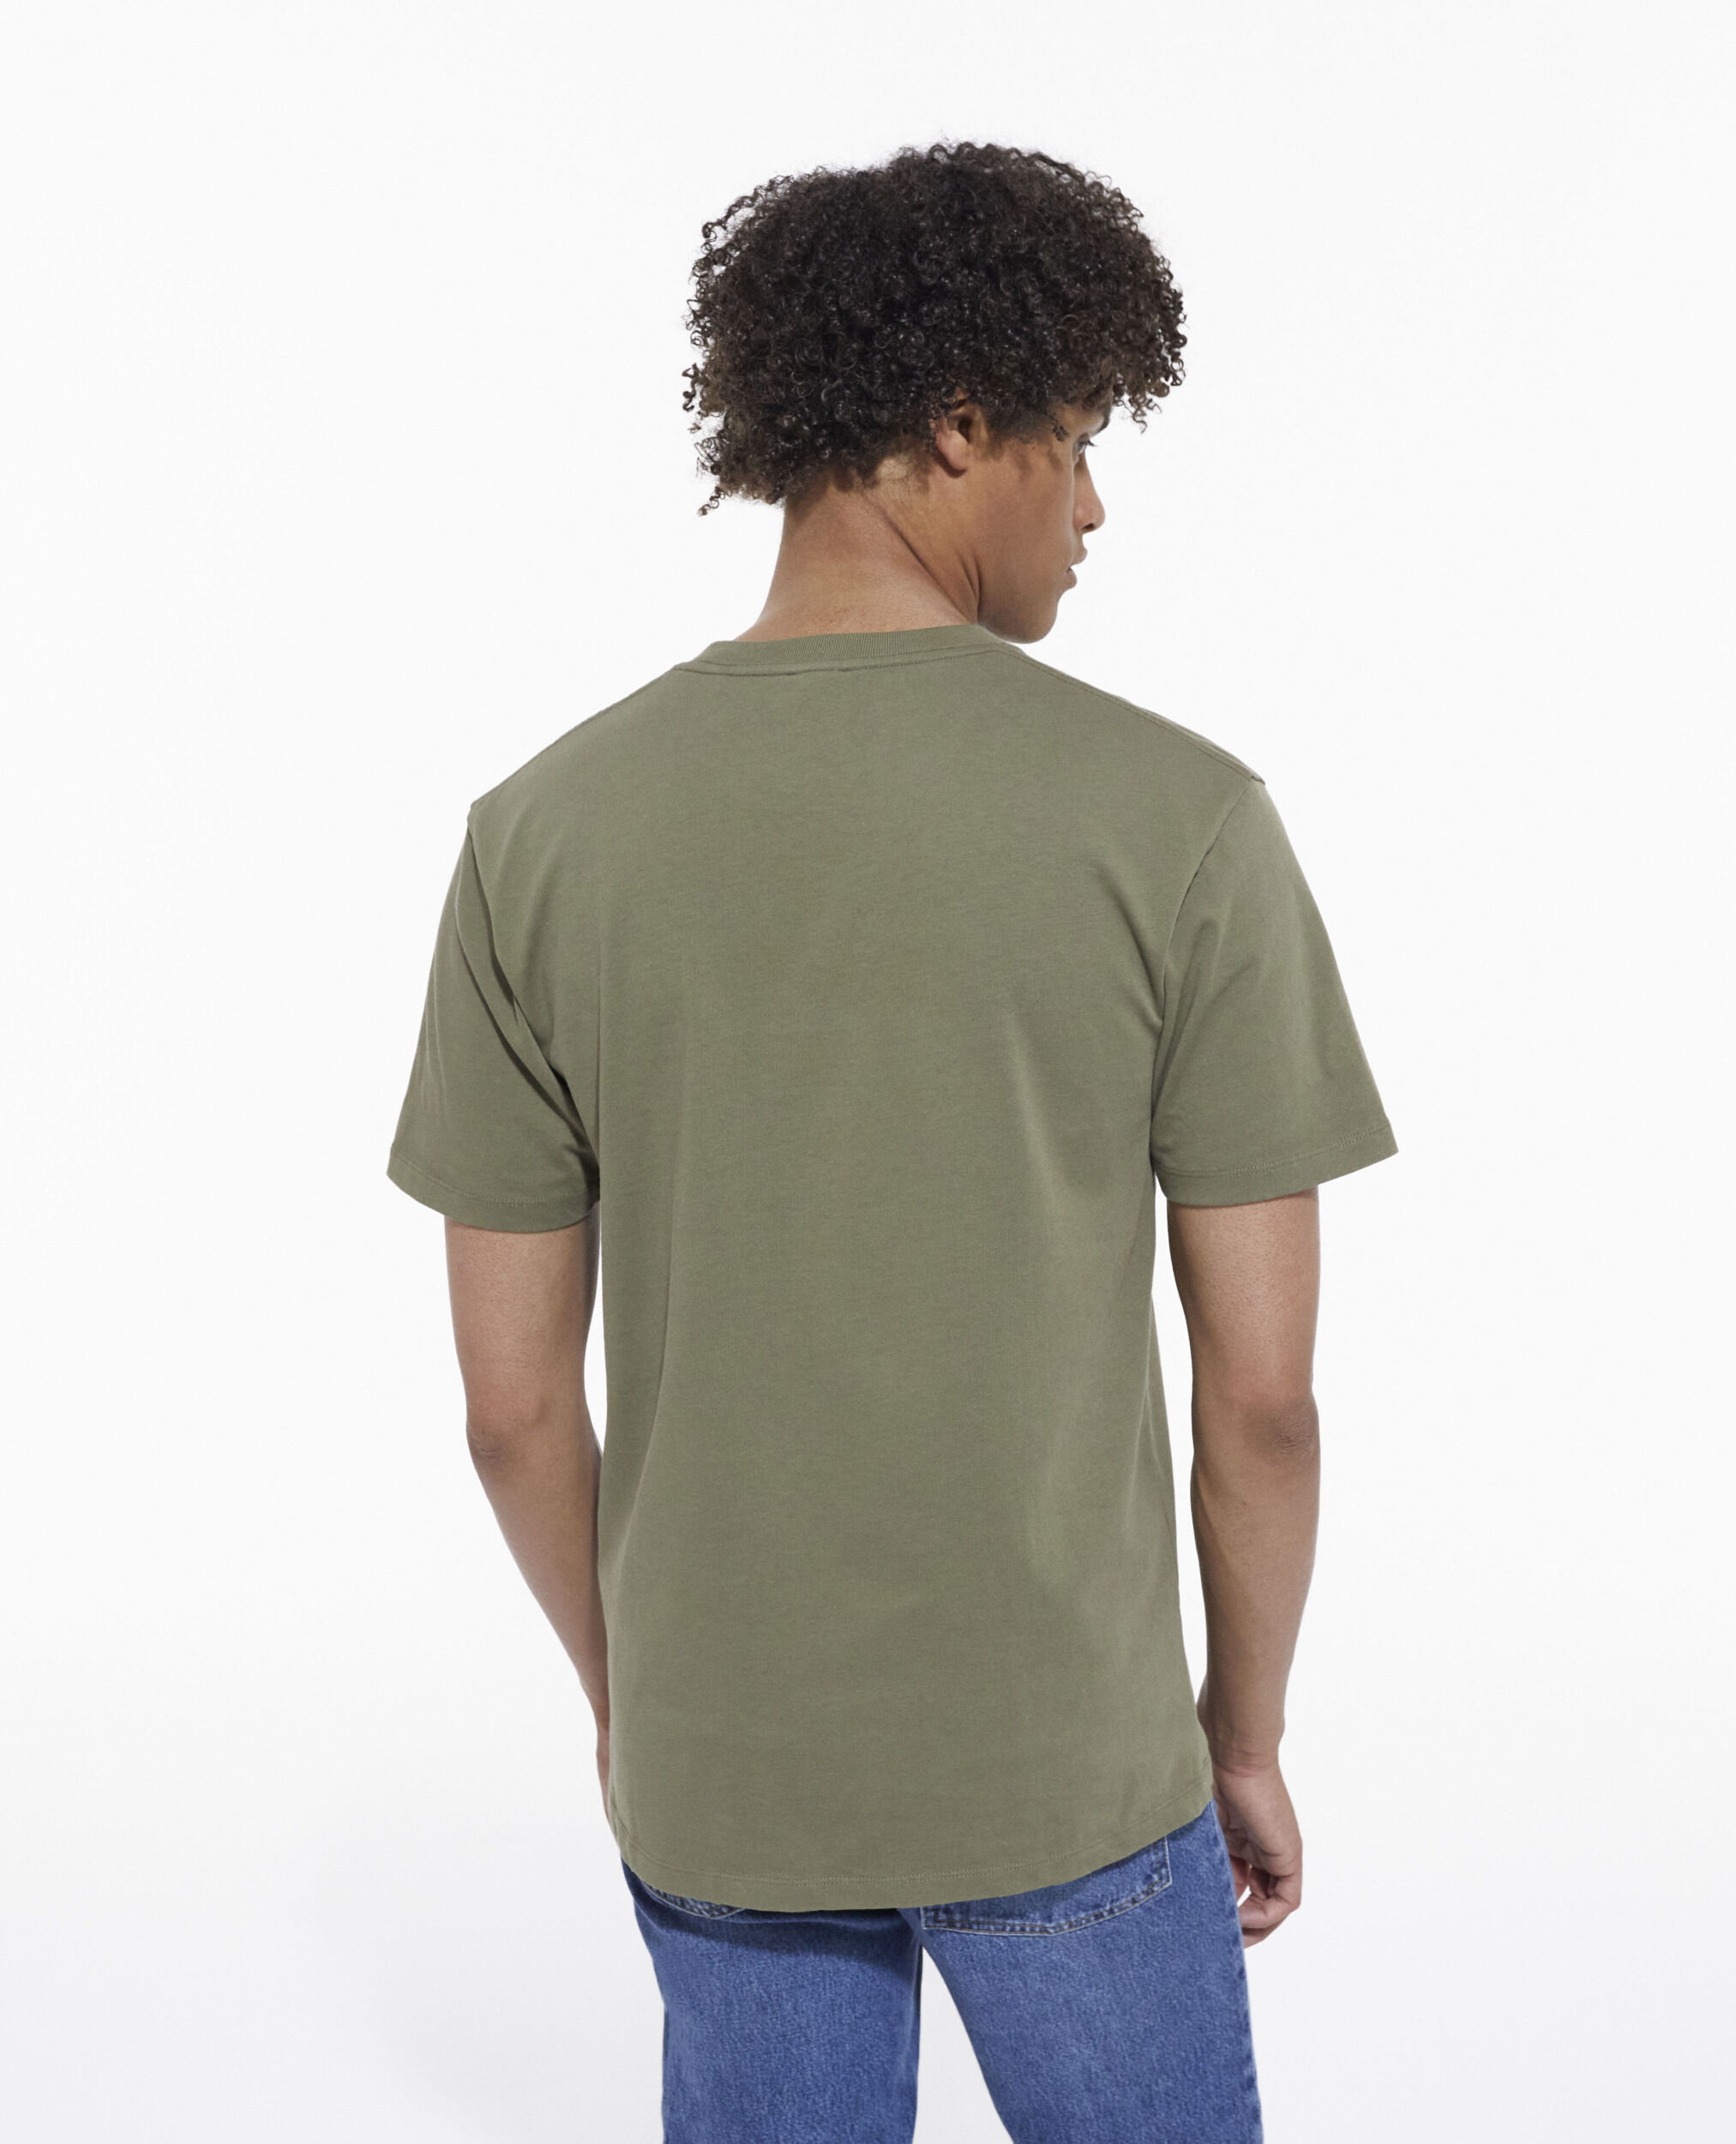 Khaki T-shirt, OLIVE NIGHT, hi-res image number null